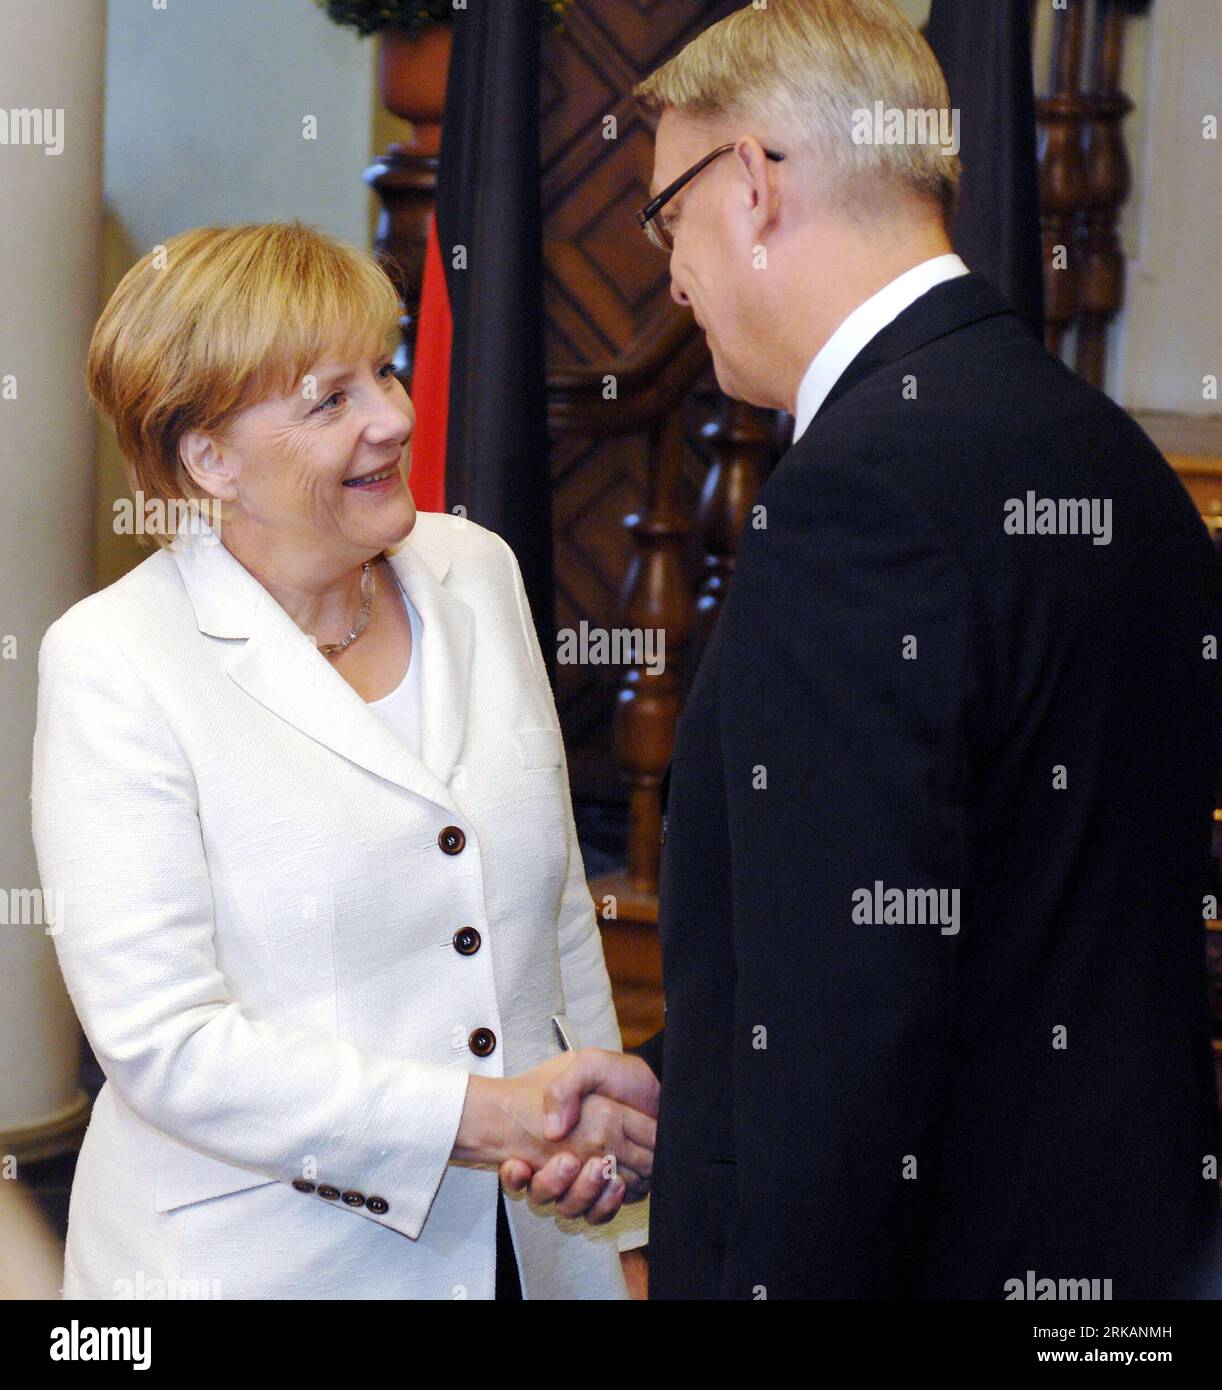 Bildnummer: 54409241  Datum: 07.09.2010  Copyright: imago/Xinhua (100907) -- RIGA, Sept. 7, 2010 (Xinhua) -- Visiting German Chancellor Angela Merkel (L) shakes hands with Latvian President Valdis Zatlers as they meet in Riga, Latvia, Sept. 7, 2010. Merkel was in Latvia for an official visit. (Xinhua/Yang Dehong)(zl) LATVIA-RIGA-GERMANY-VISIT PUBLICATIONxNOTxINxCHN Politik People Premiumd xint kbdig xub 2010 quadrat     Bildnummer 54409241 Date 07 09 2010 Copyright Imago XINHUA  Riga Sept 7 2010 XINHUA Visiting German Chancellor Angela Merkel l Shakes Hands With Latvian President Valdis Zatler Stock Photo